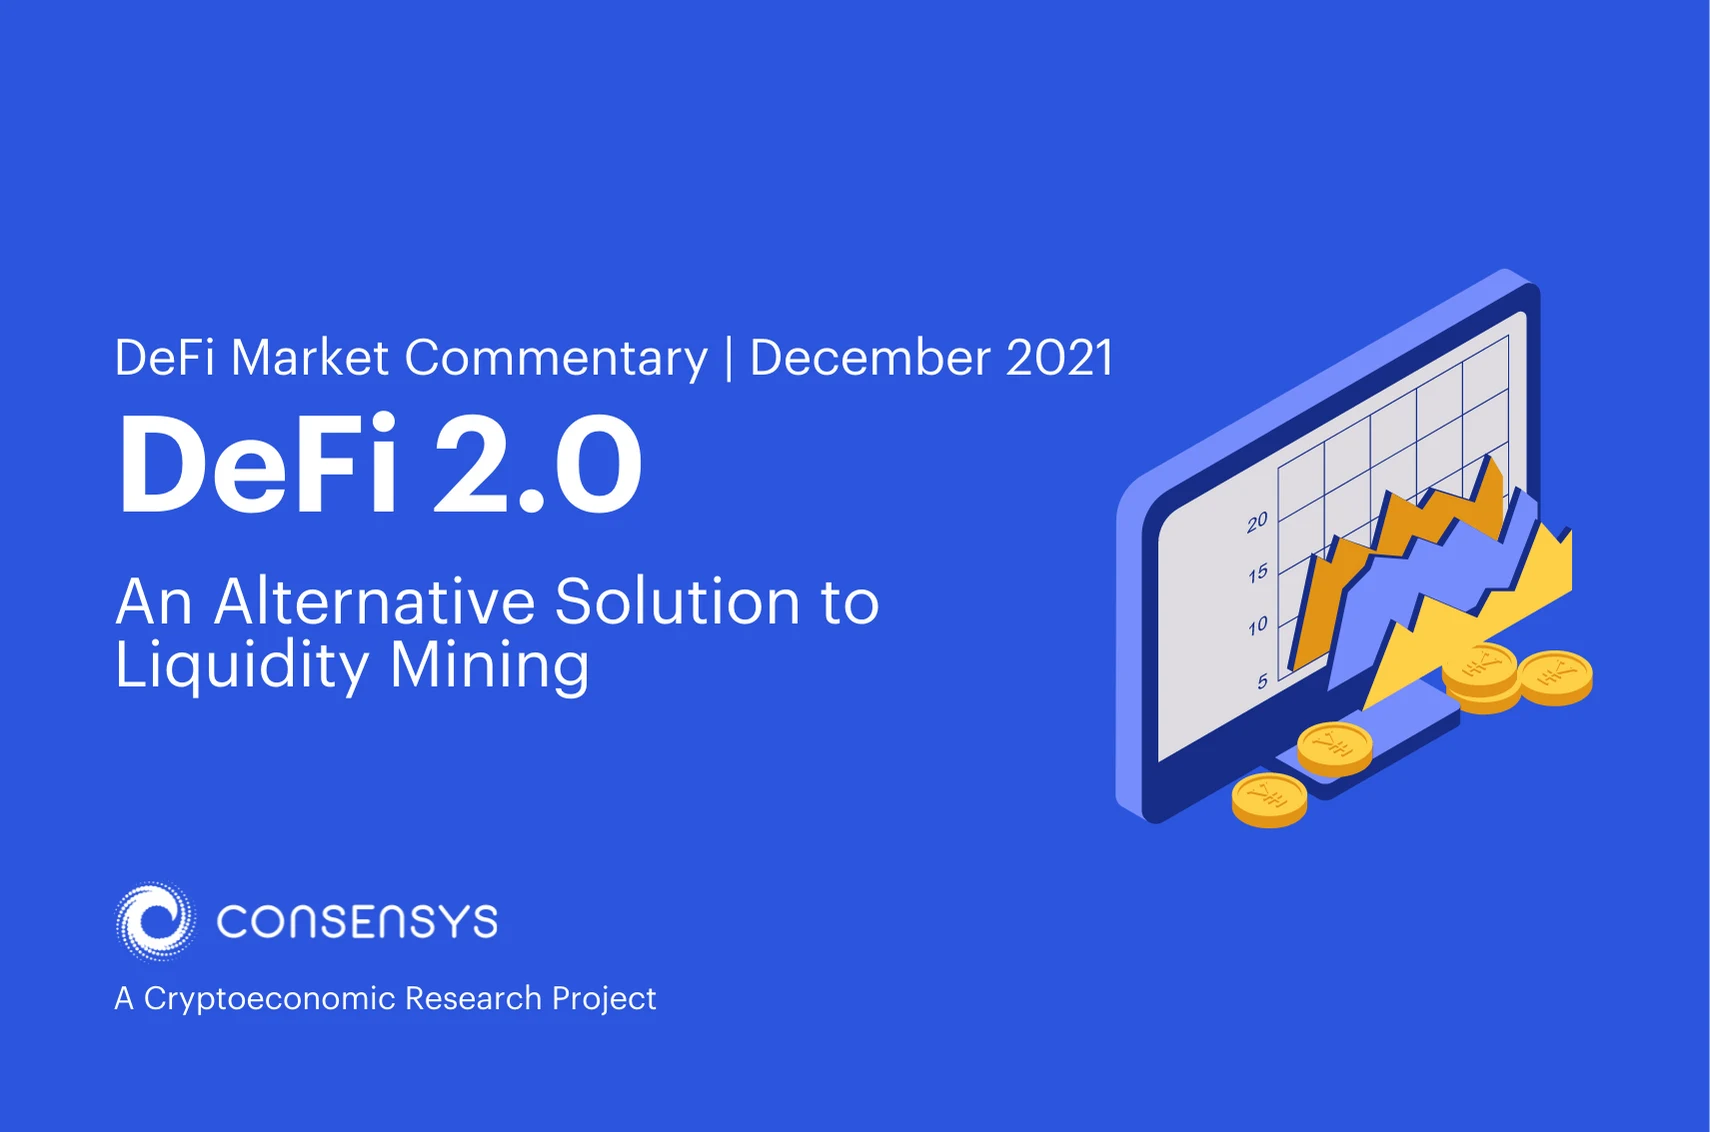 Image: DeFi 2.0: An Alternative Solution to Liquidity Mining